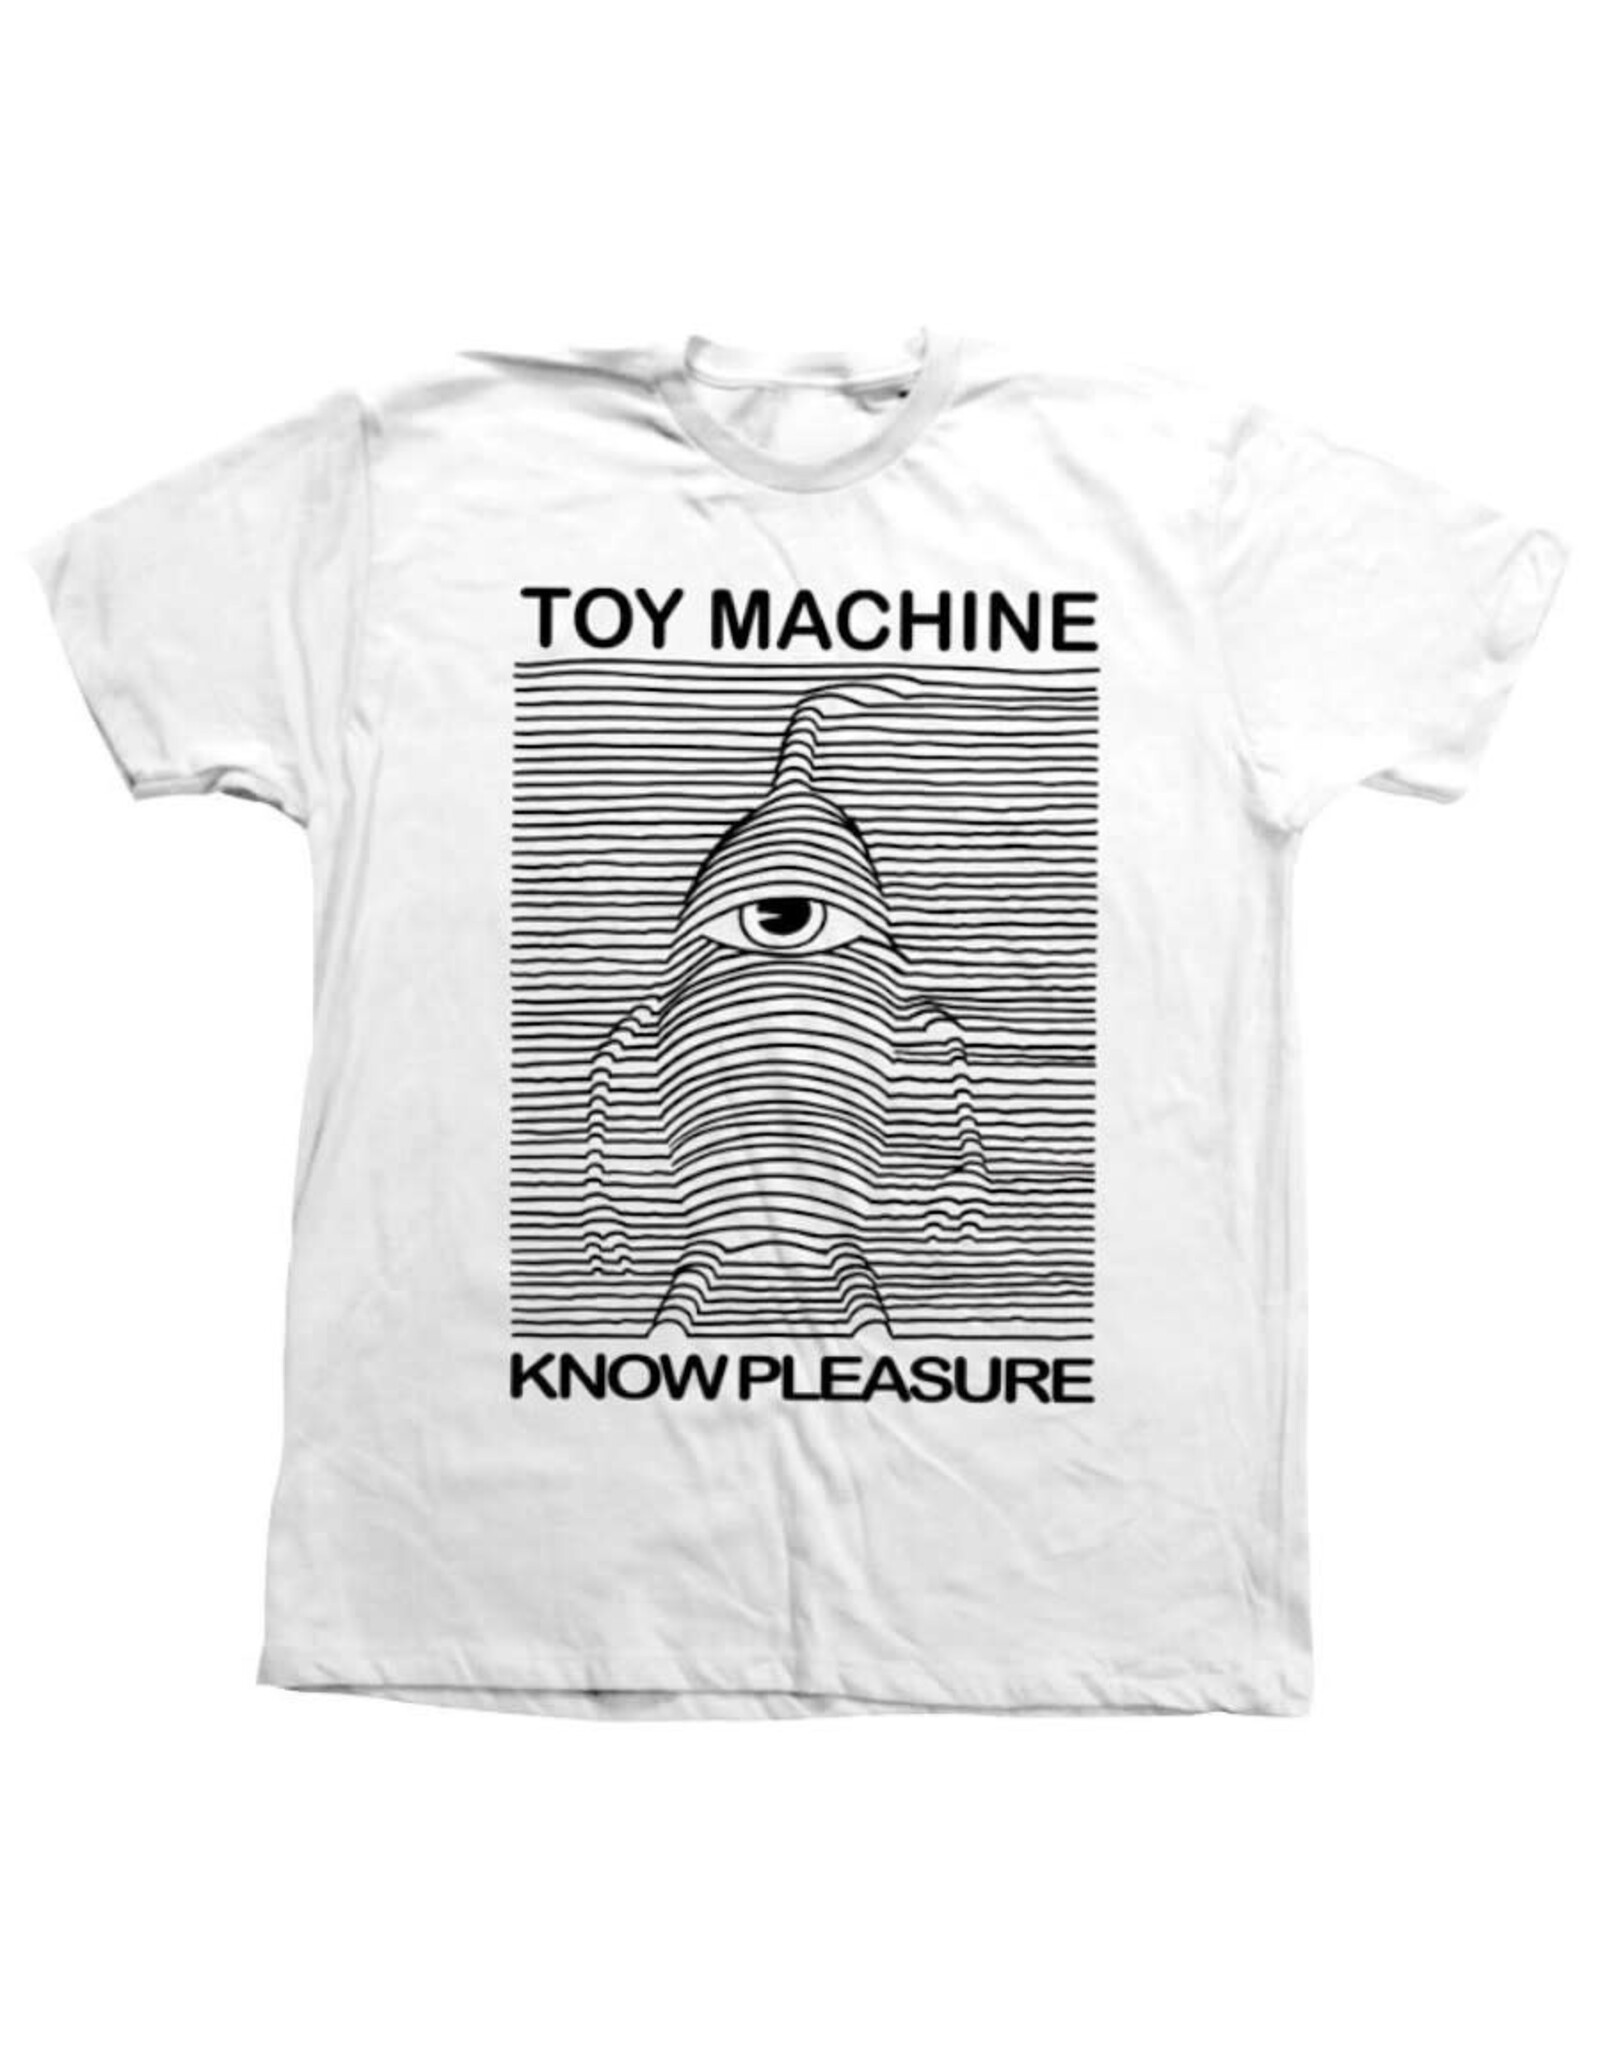 Toy Machine Toy Machine Tee Toy Division S/S (White)